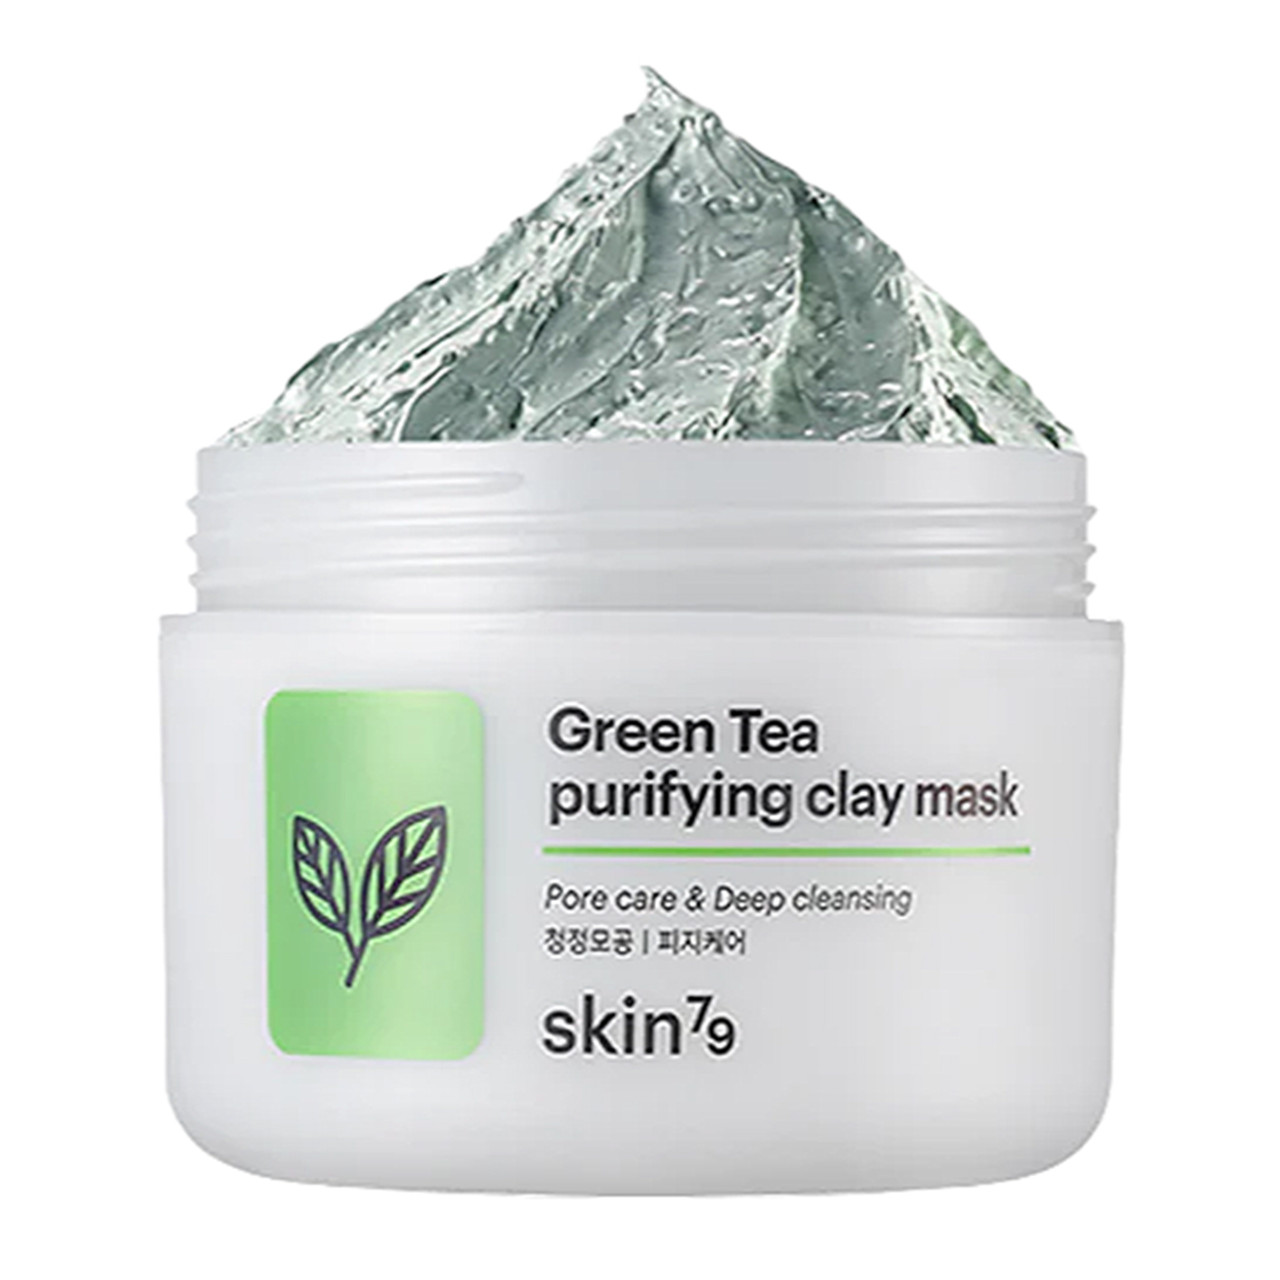 Skin79 Green Tea Purifying Clay Mask - 3.38 oz